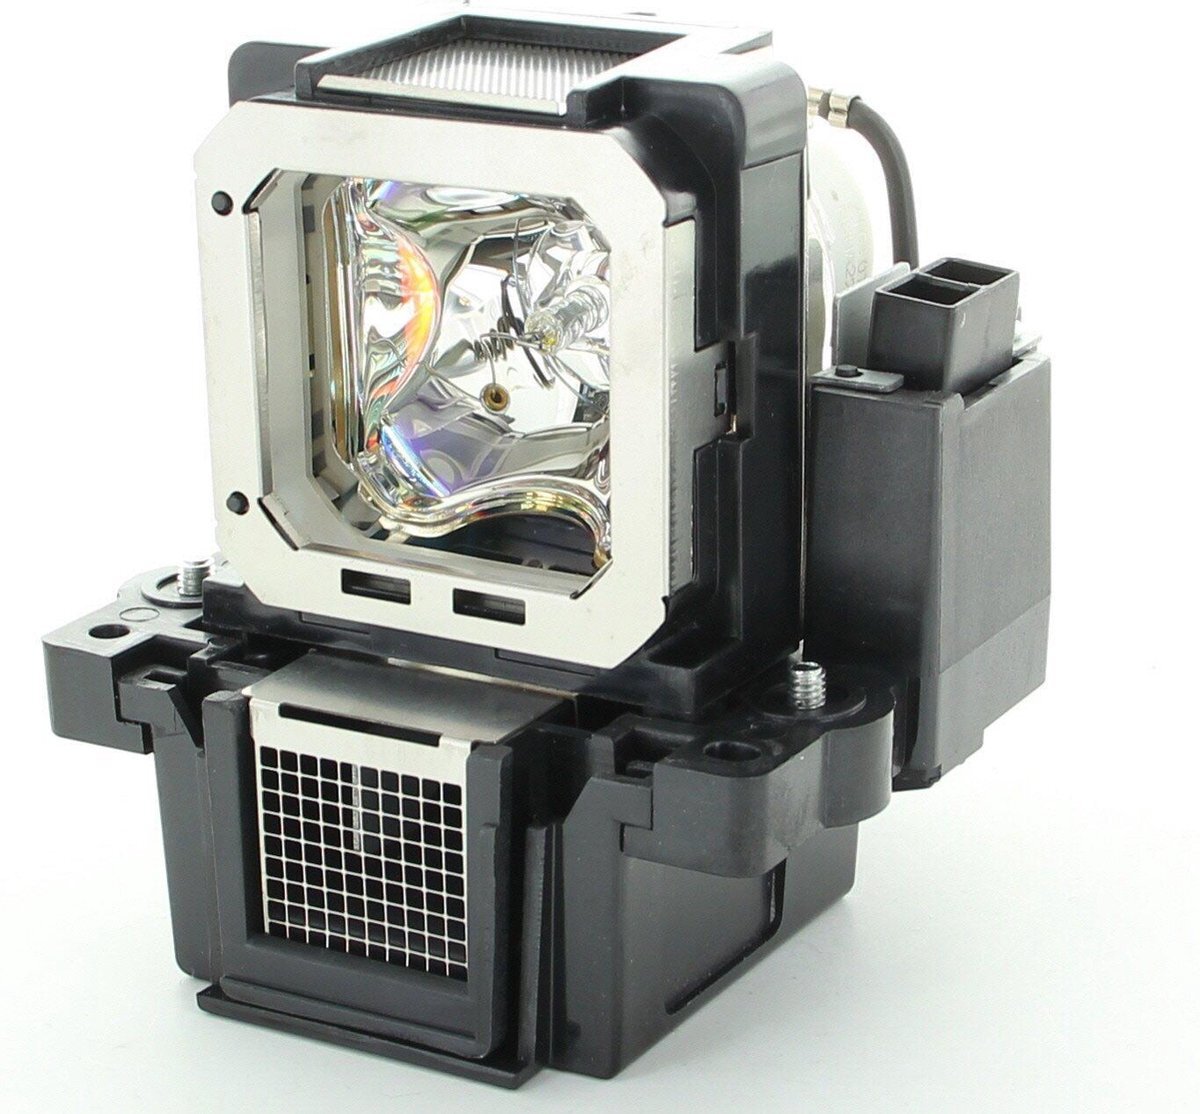 QualityLamp JVC DLA-X6900B beamerlamp PK-L2615U / PK-L2615UG, bevat originele NSHA lamp. Prestaties gelijk aan origineel.